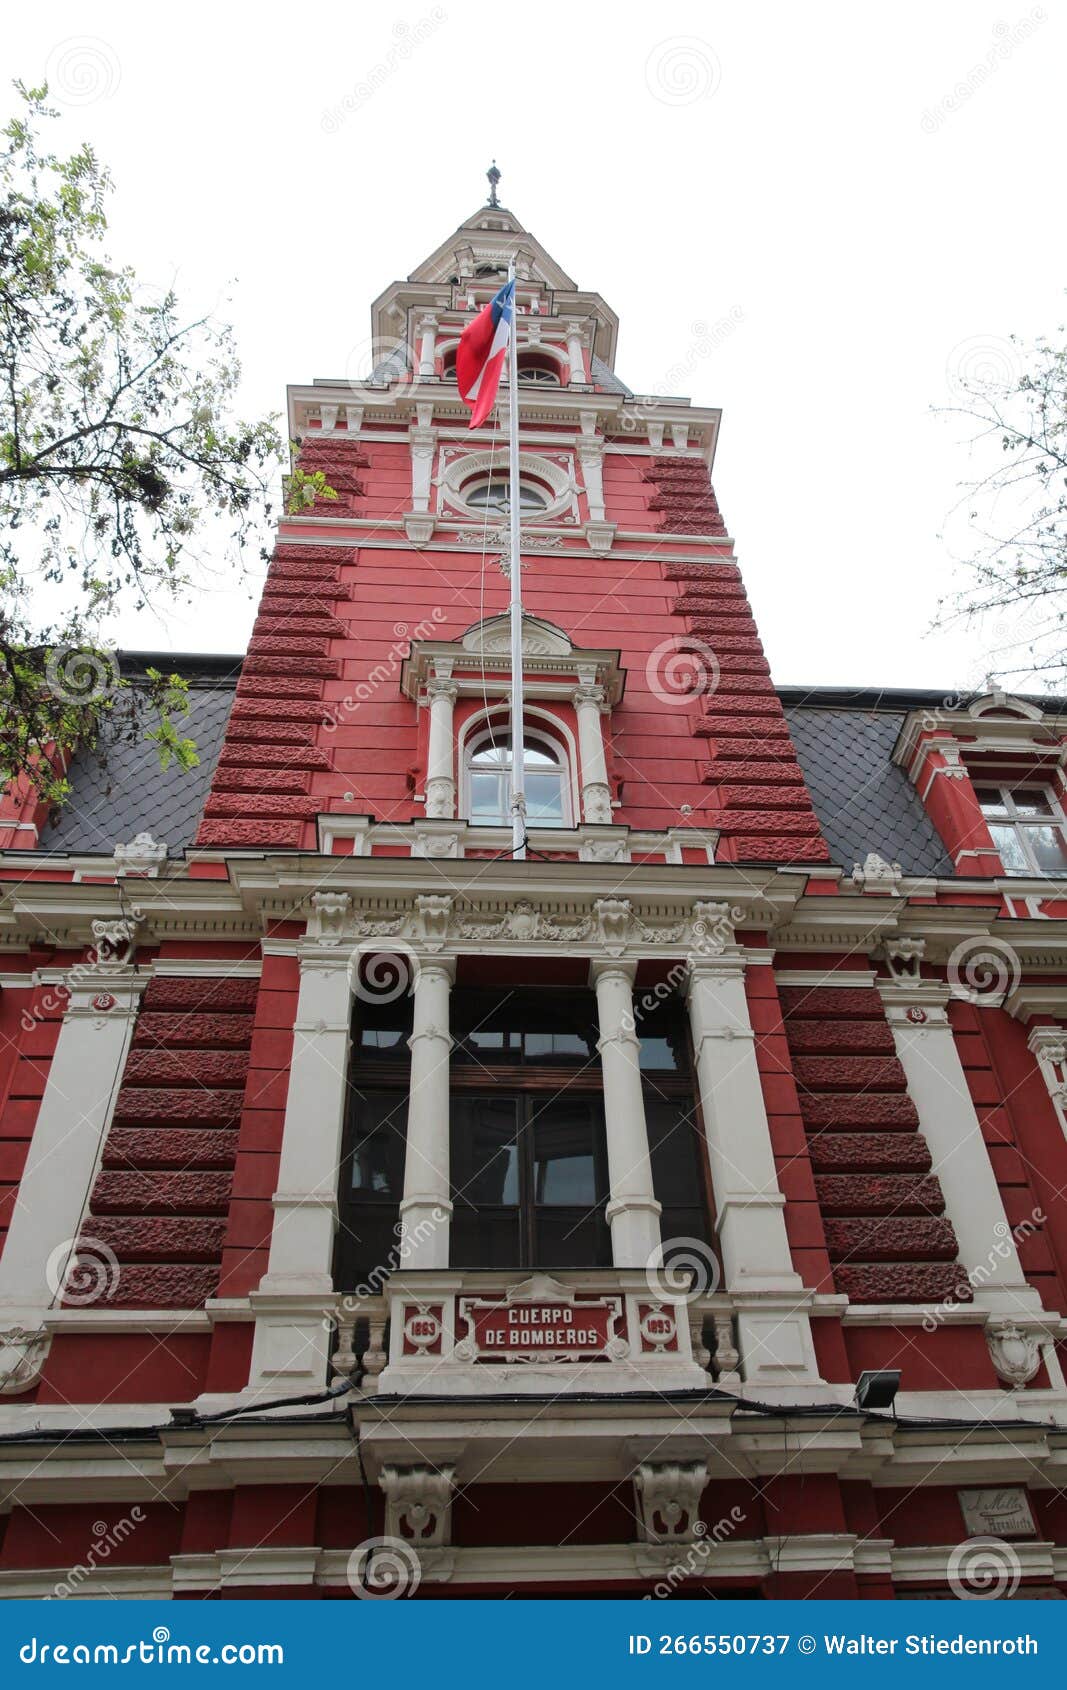 view of the fire station building cuerpo de bomberos in santiago de chile, chile